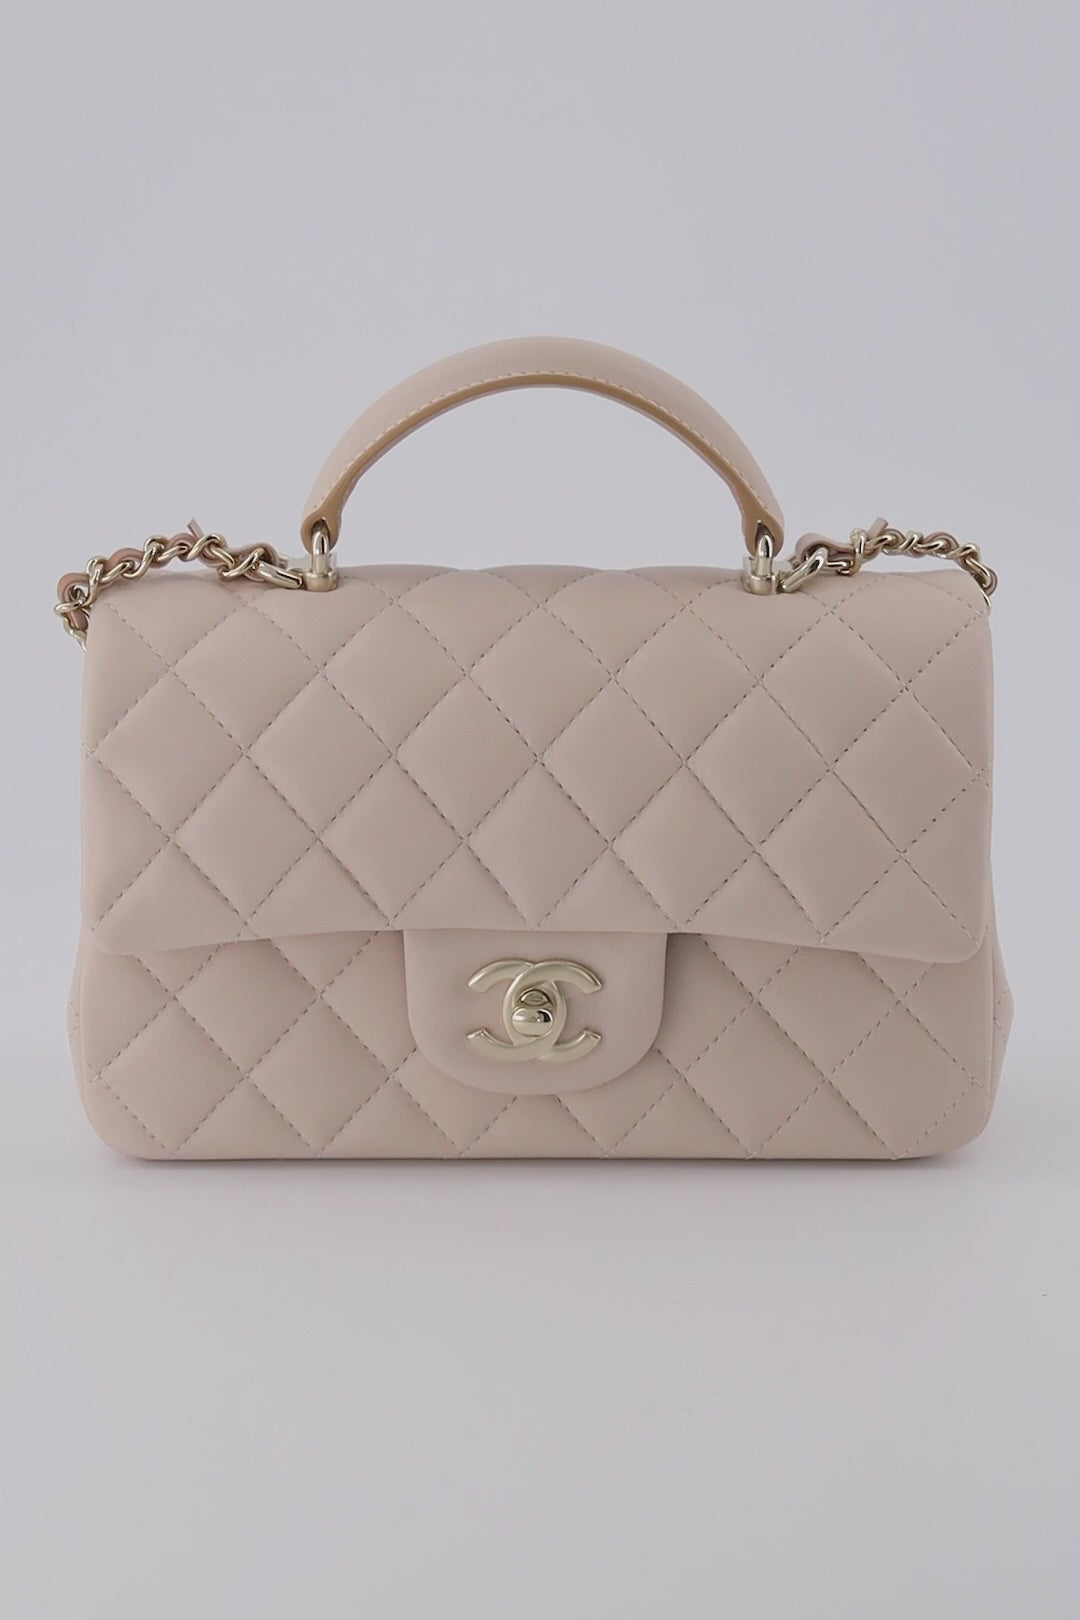 CHANEL  Bags  Rare Chanel Byzantine Bijoux Ivory Patent Vegan Leather  Pillow Bag Gold Hw  Poshmark